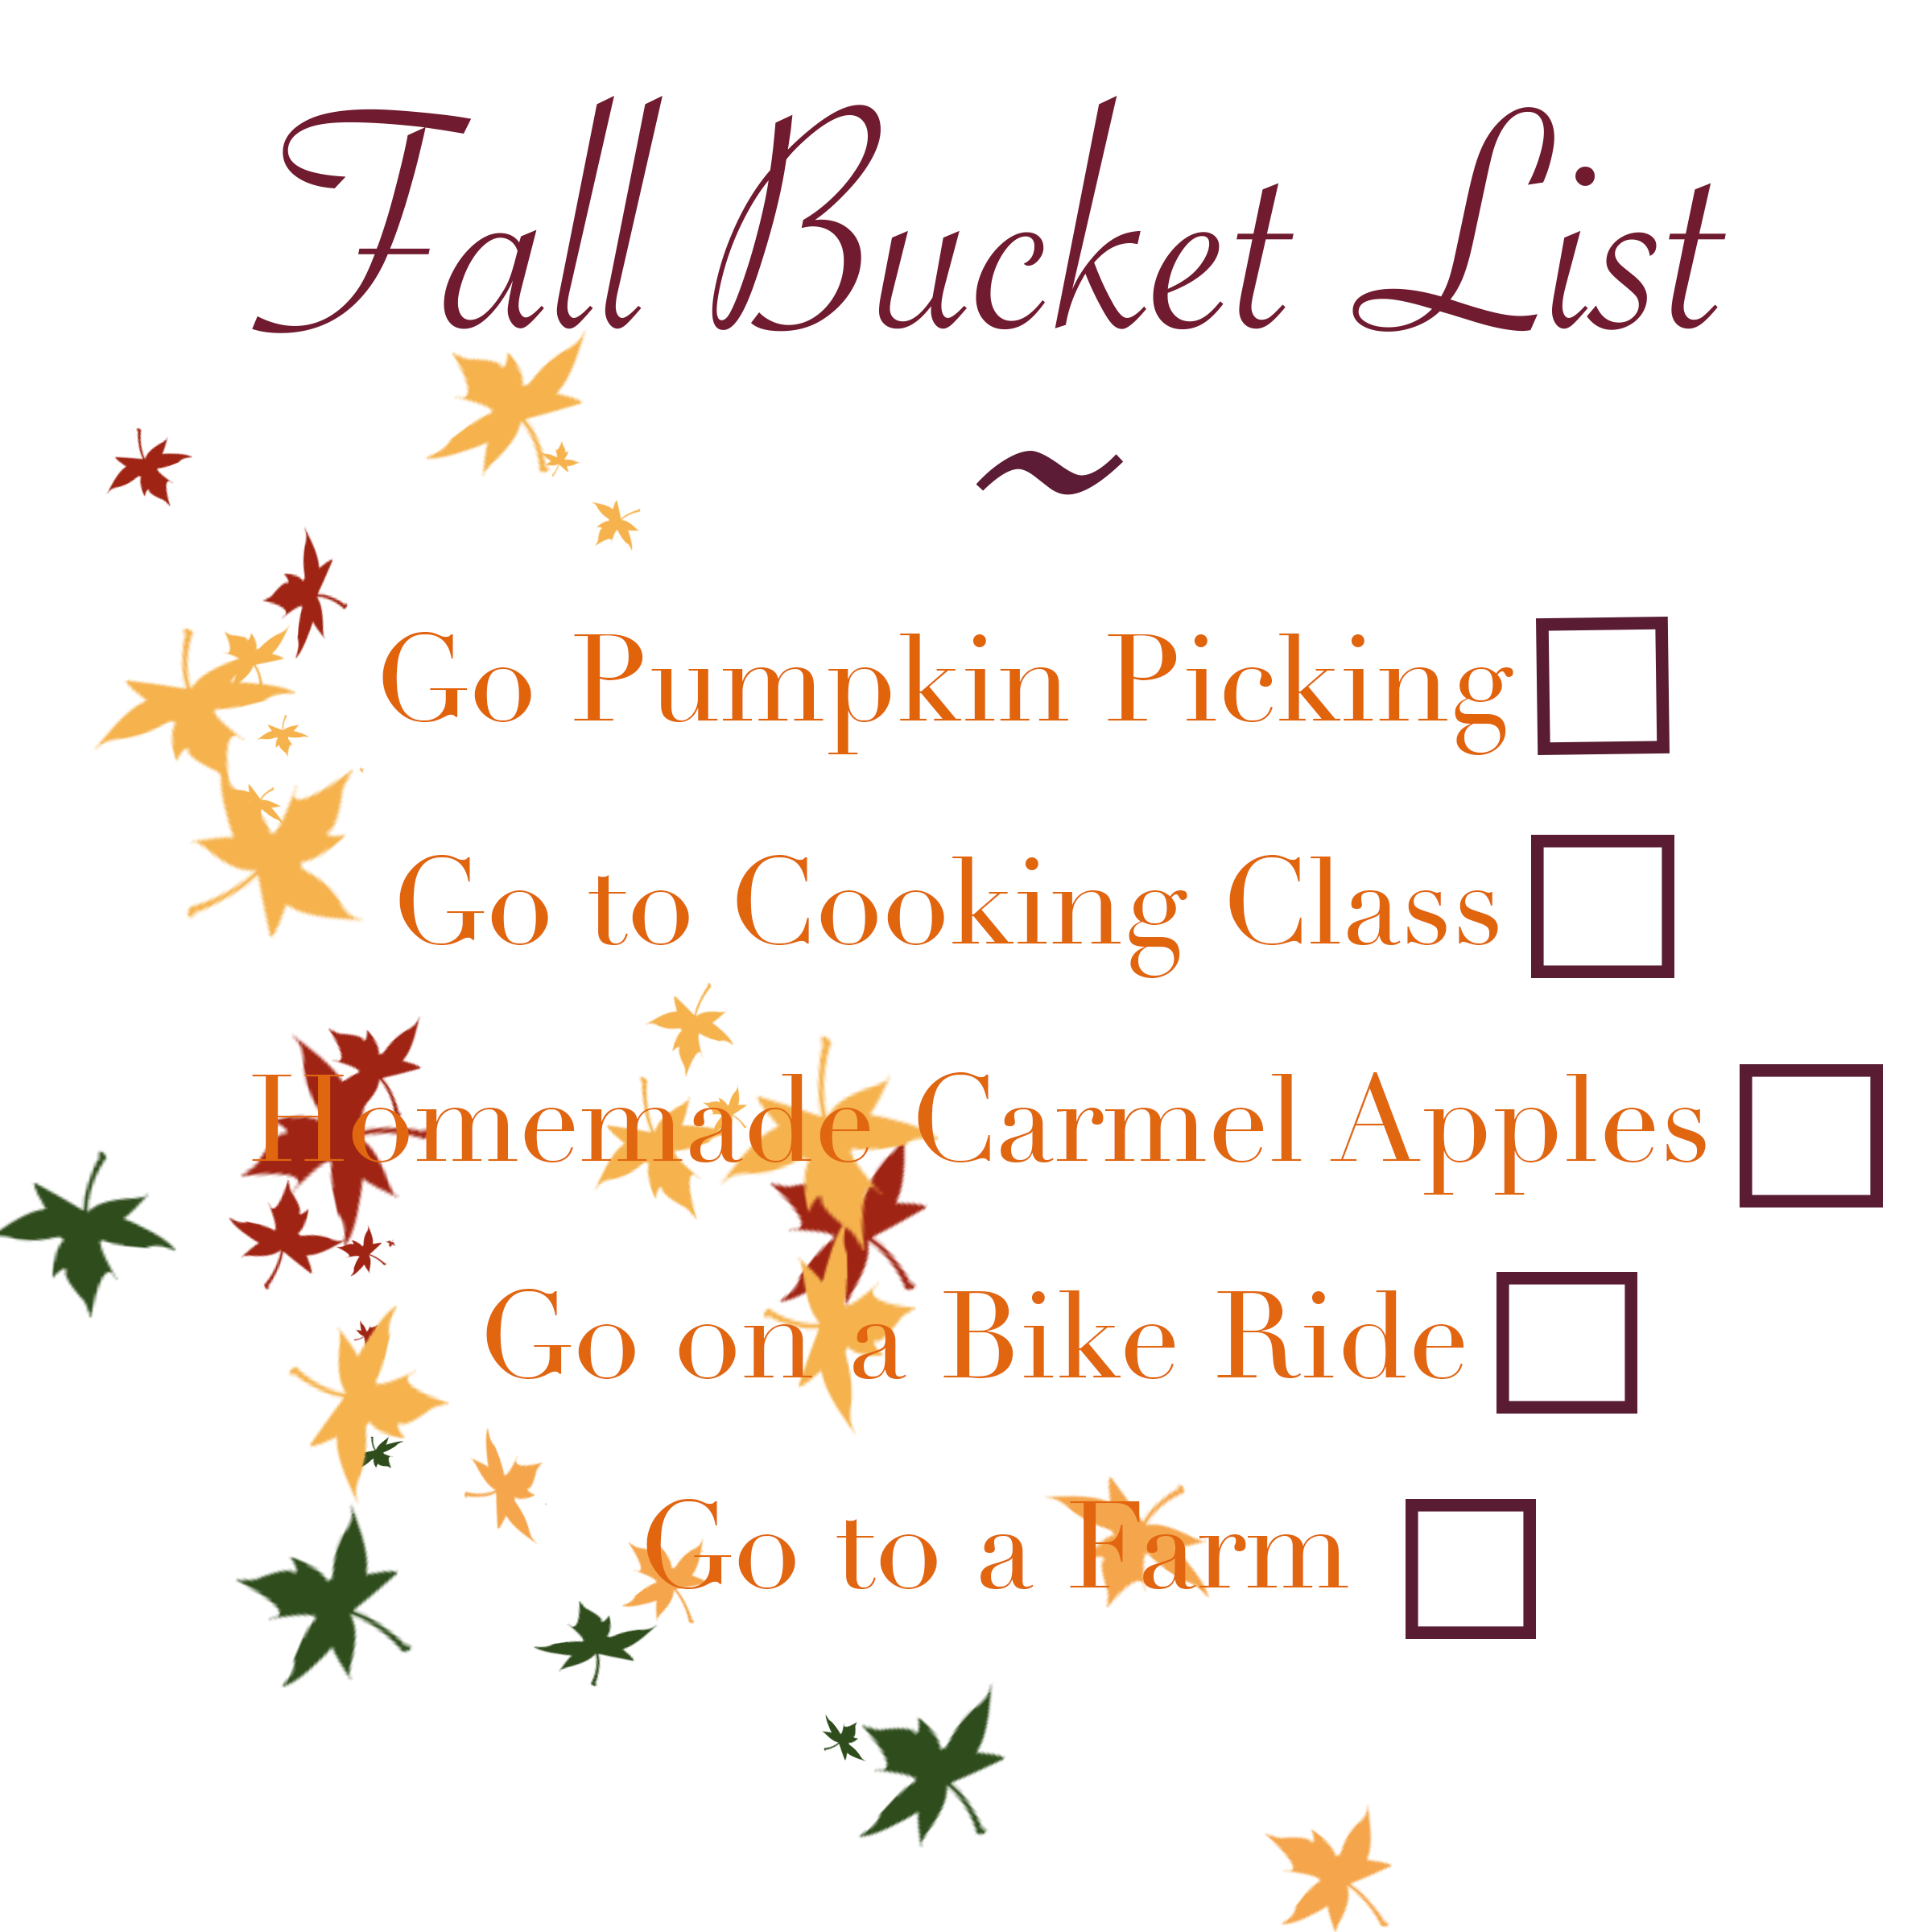 Fall Bucket List!